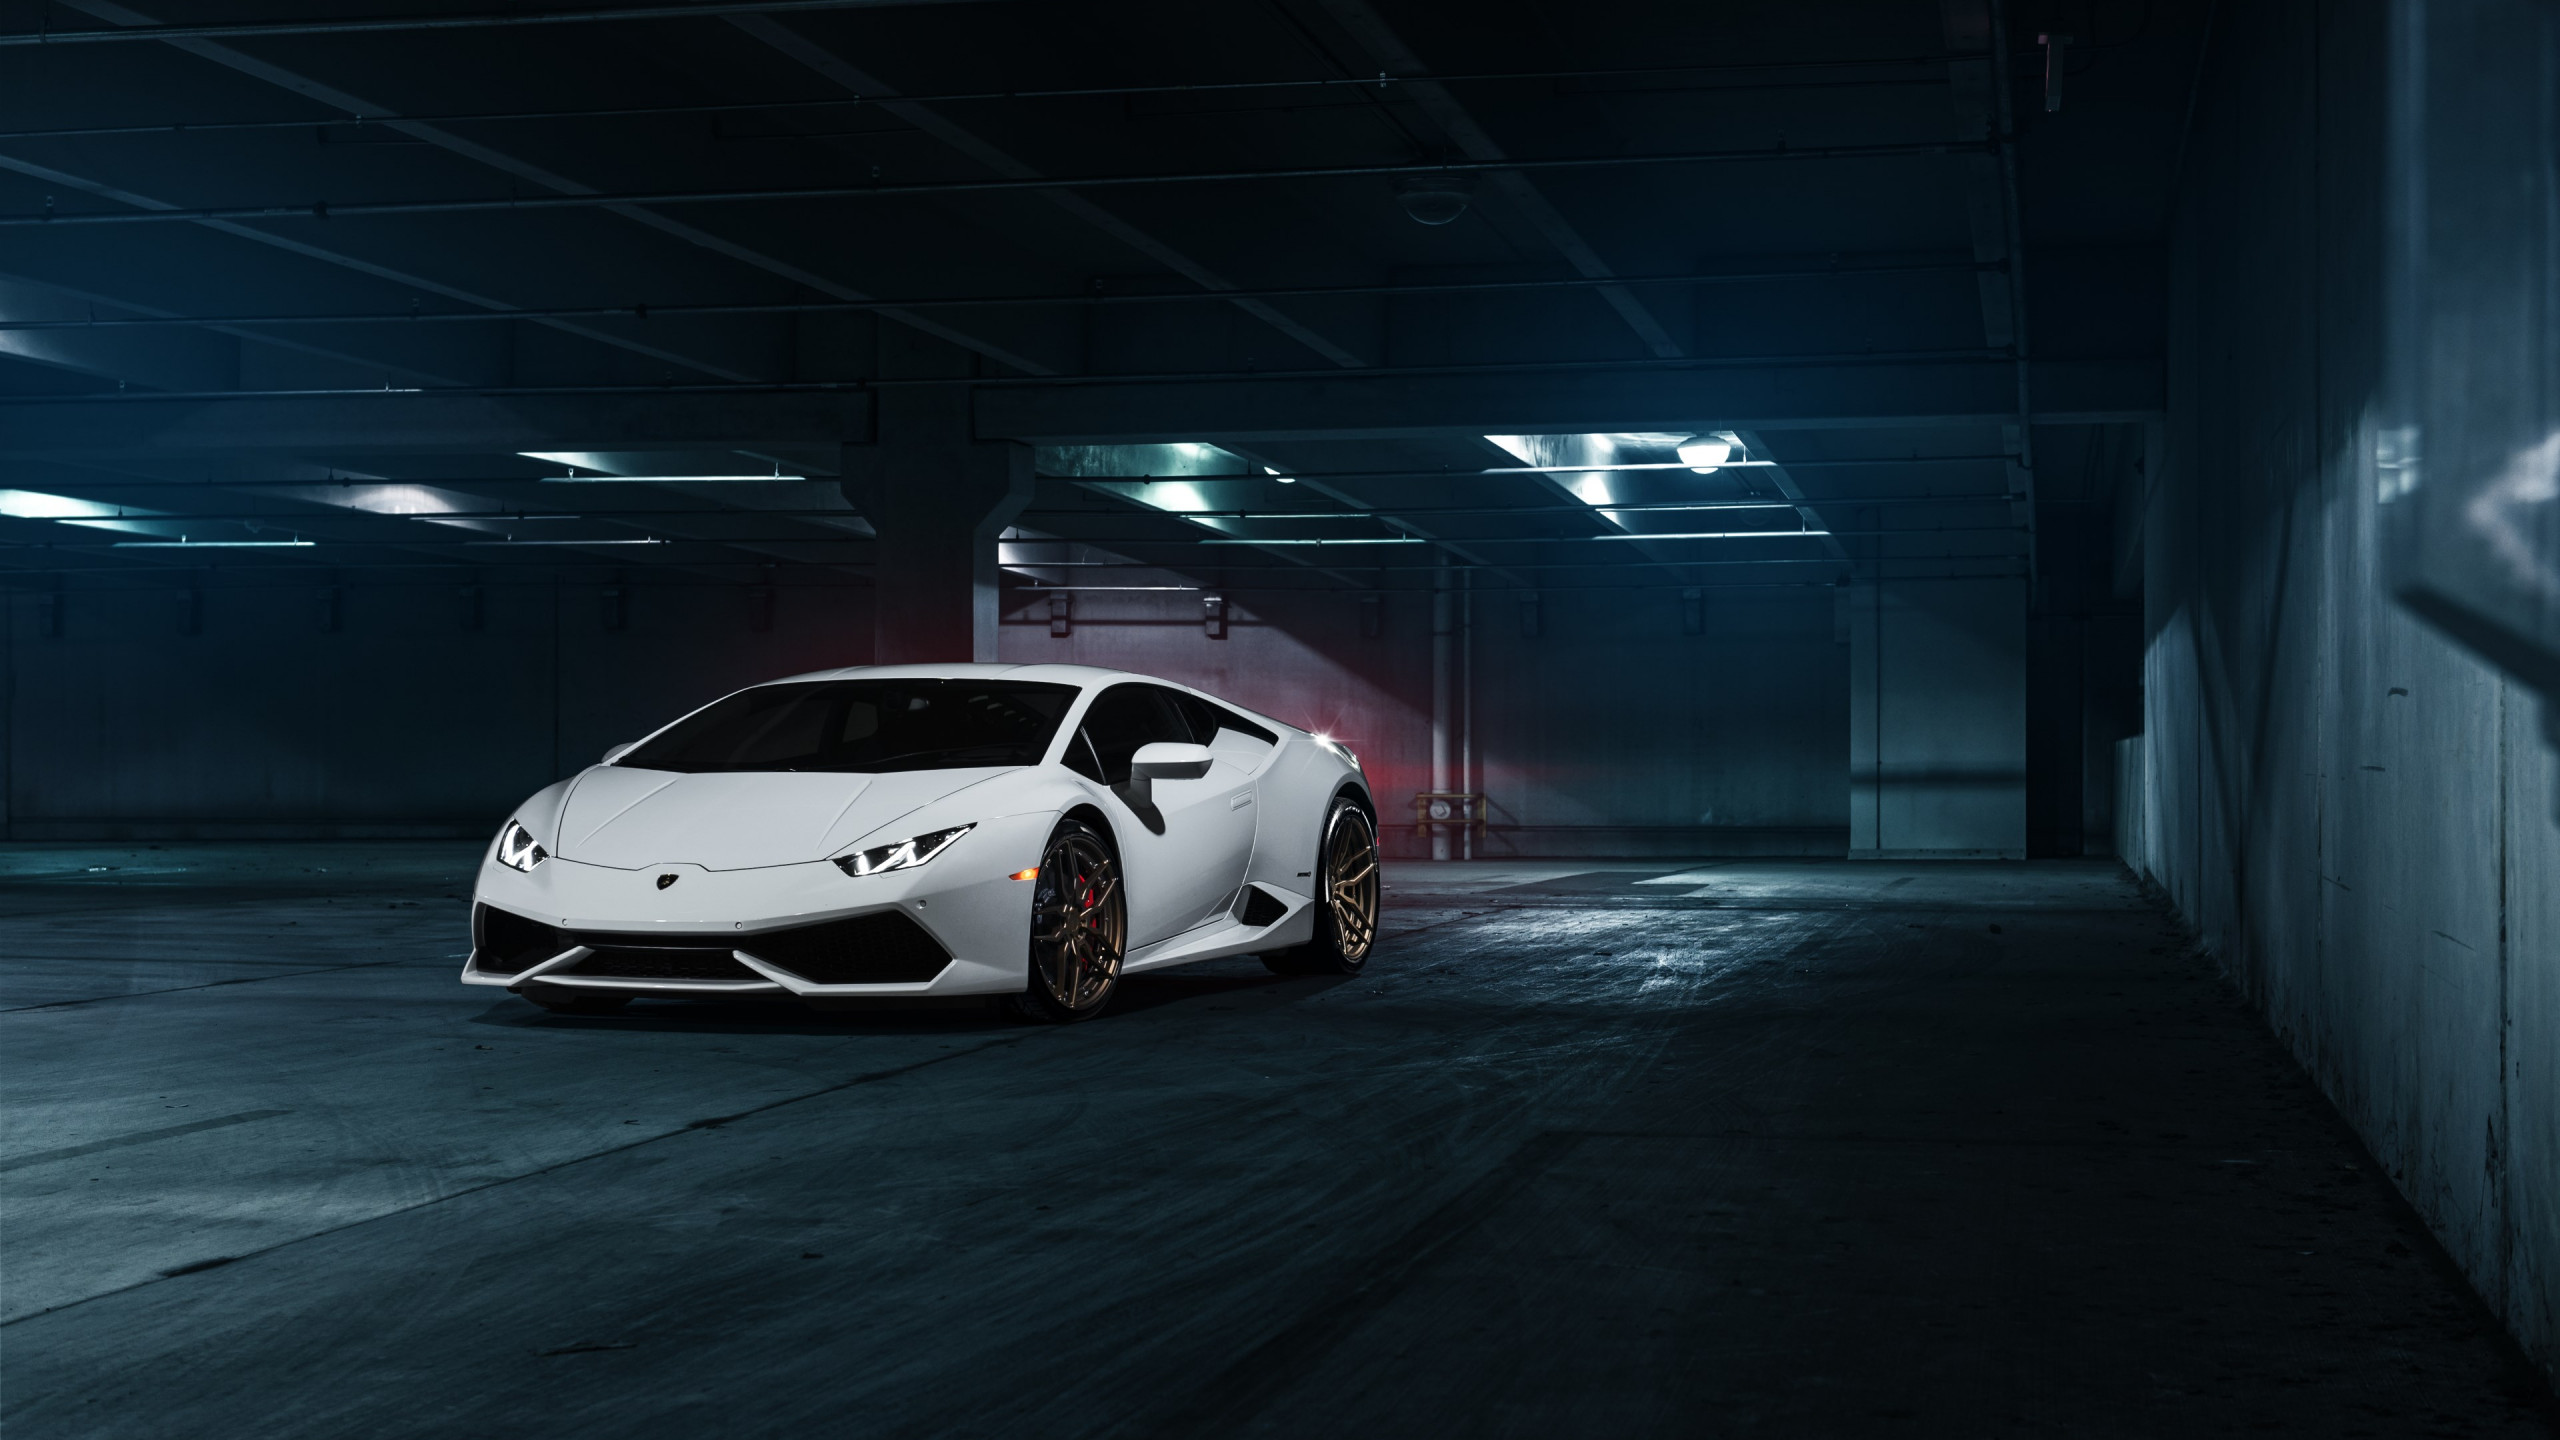 Lamborghini Huracan frontside wallpaper 2560x1440